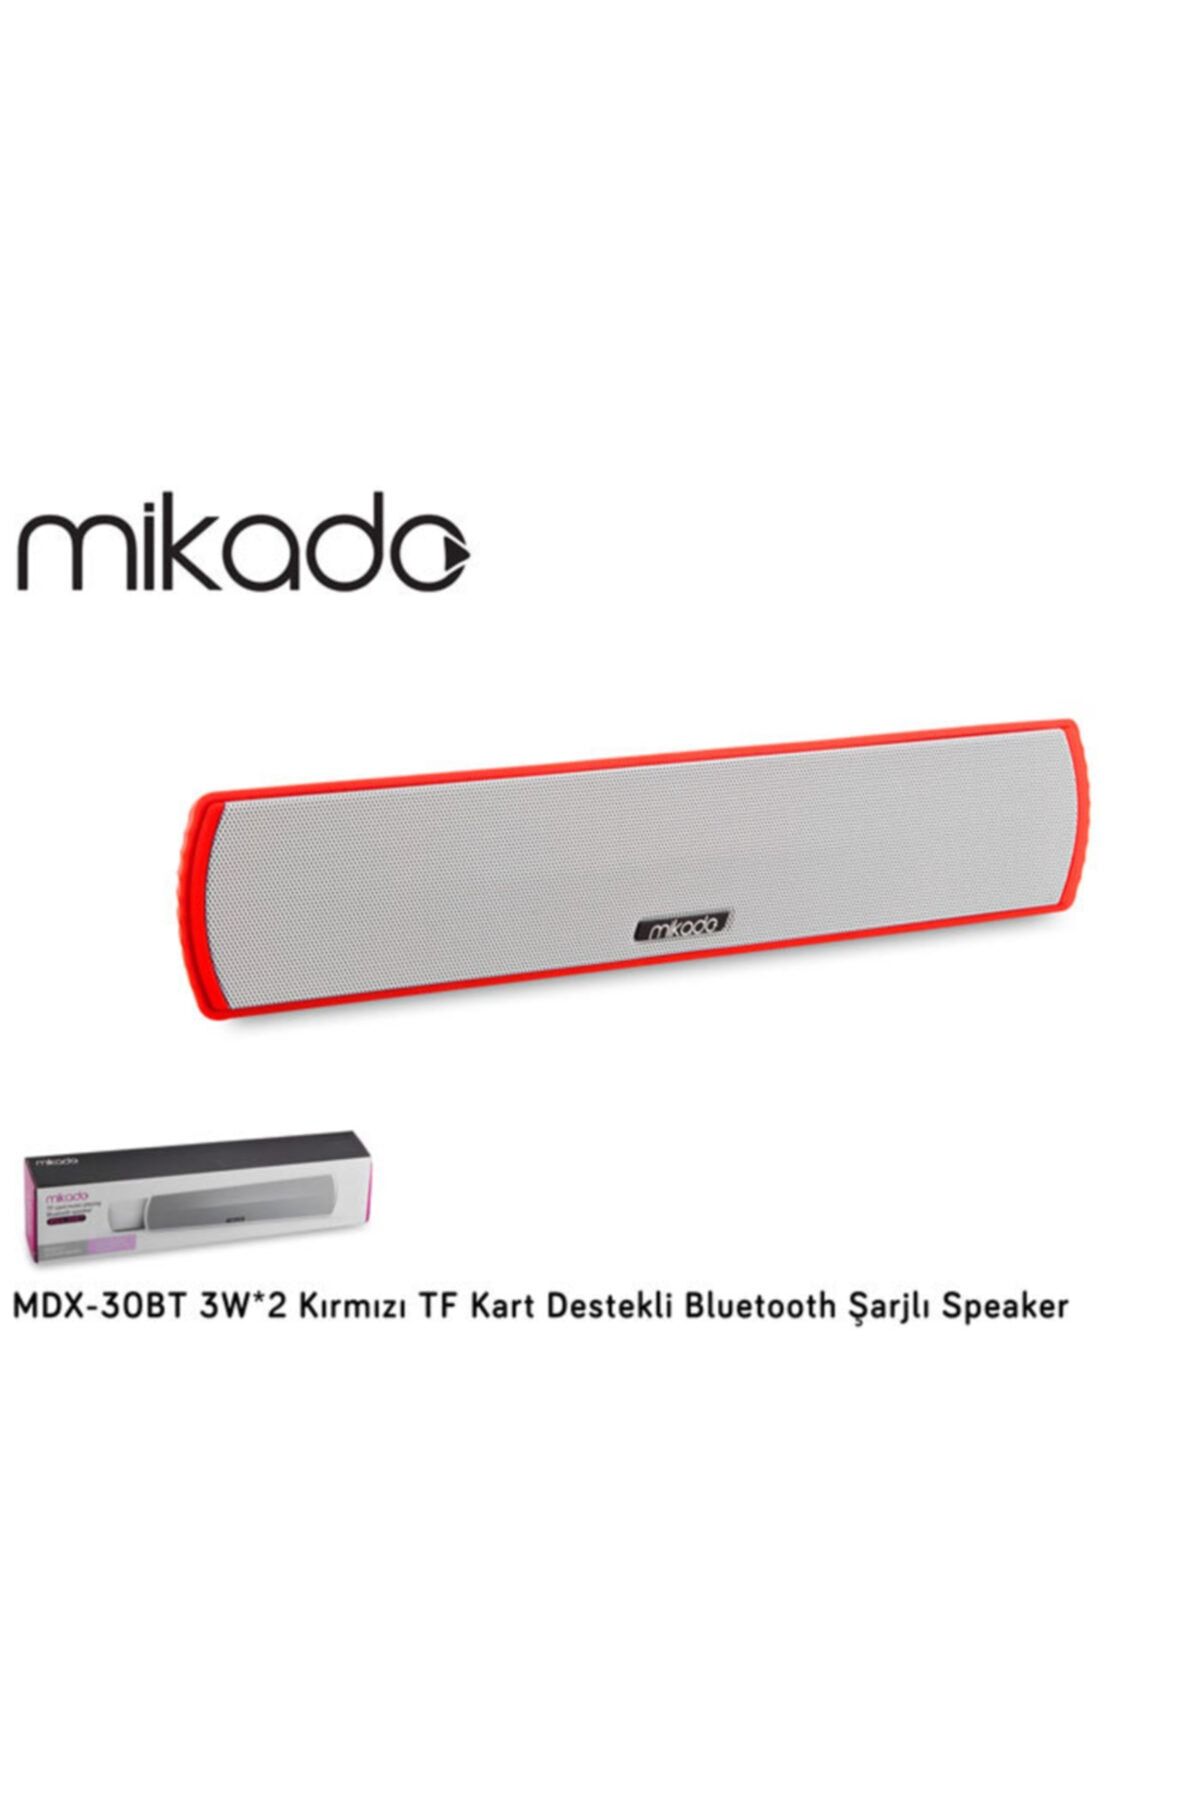 Mikado Mdx-30bt 3w*2 Kırmızı Tf Kart Destekli Bluetooth Şarjlı Speaker